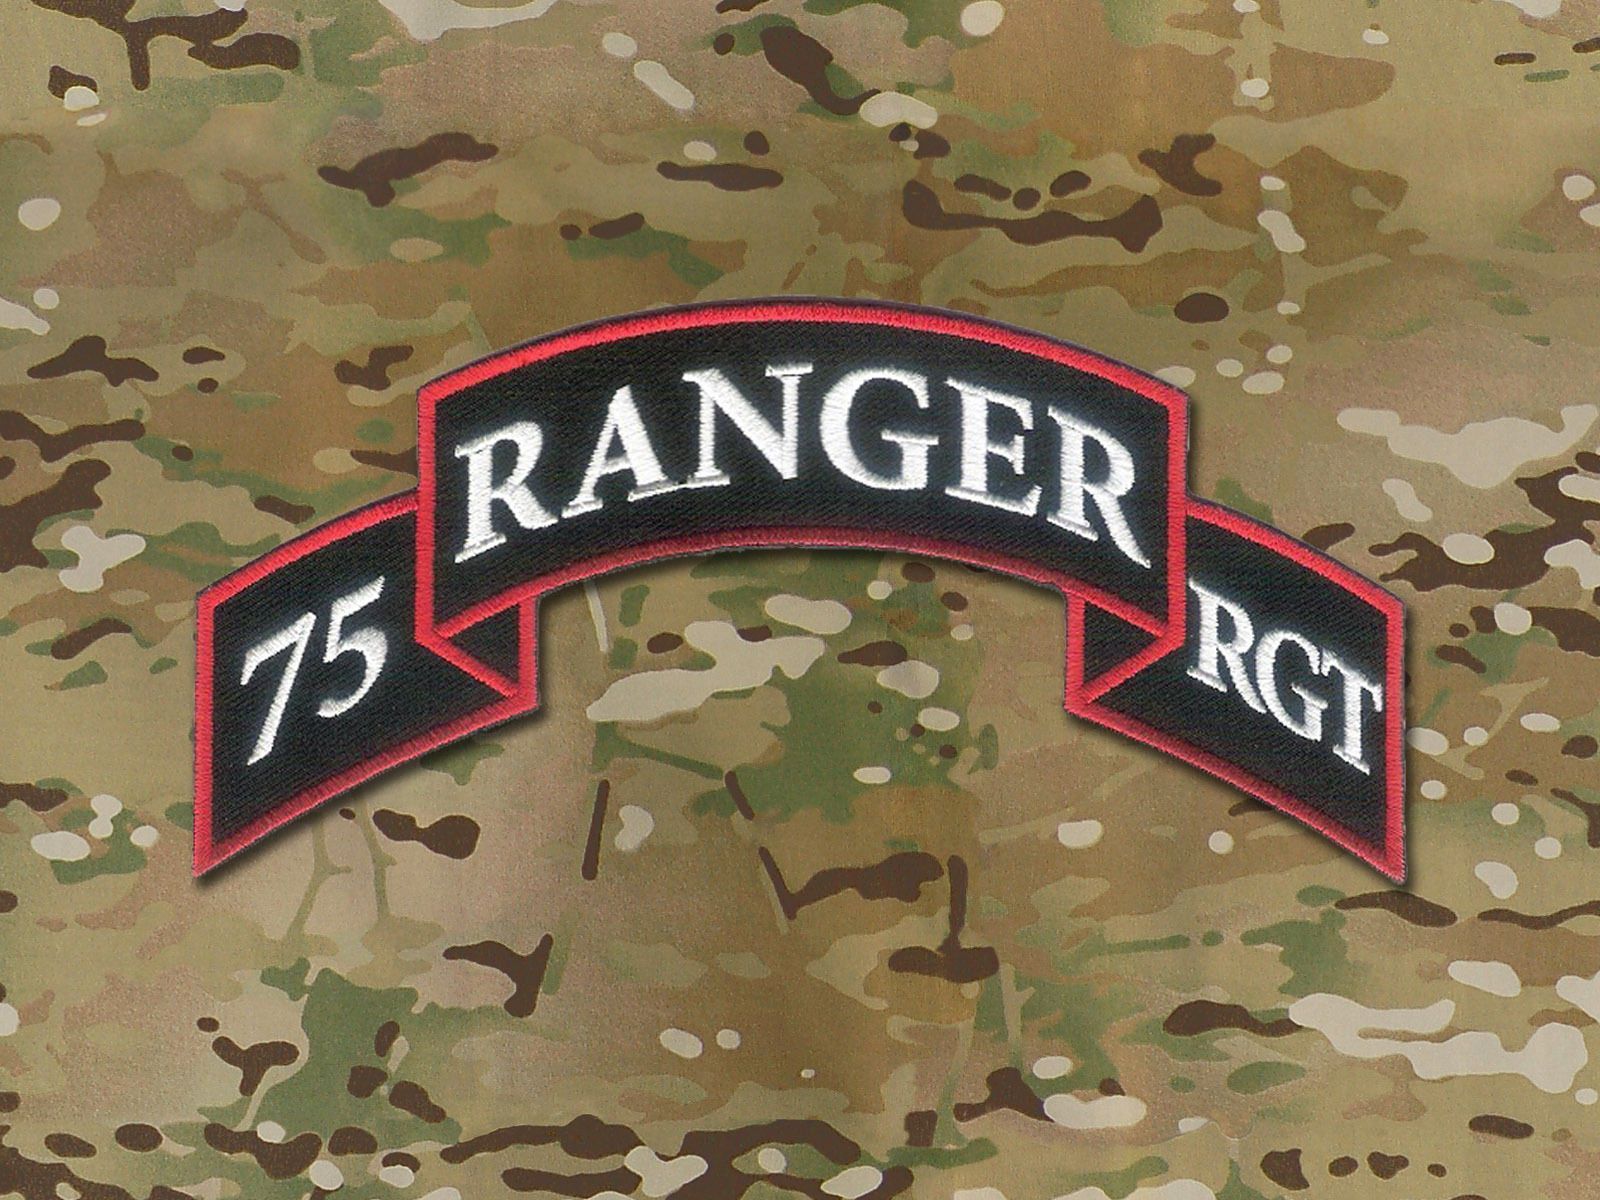 Large 75th Infantry Regiment -US Ranger Scroll X 3 1 2 Merrowed Edge. EBayth Ranger Regiment, Ranger, Infantry